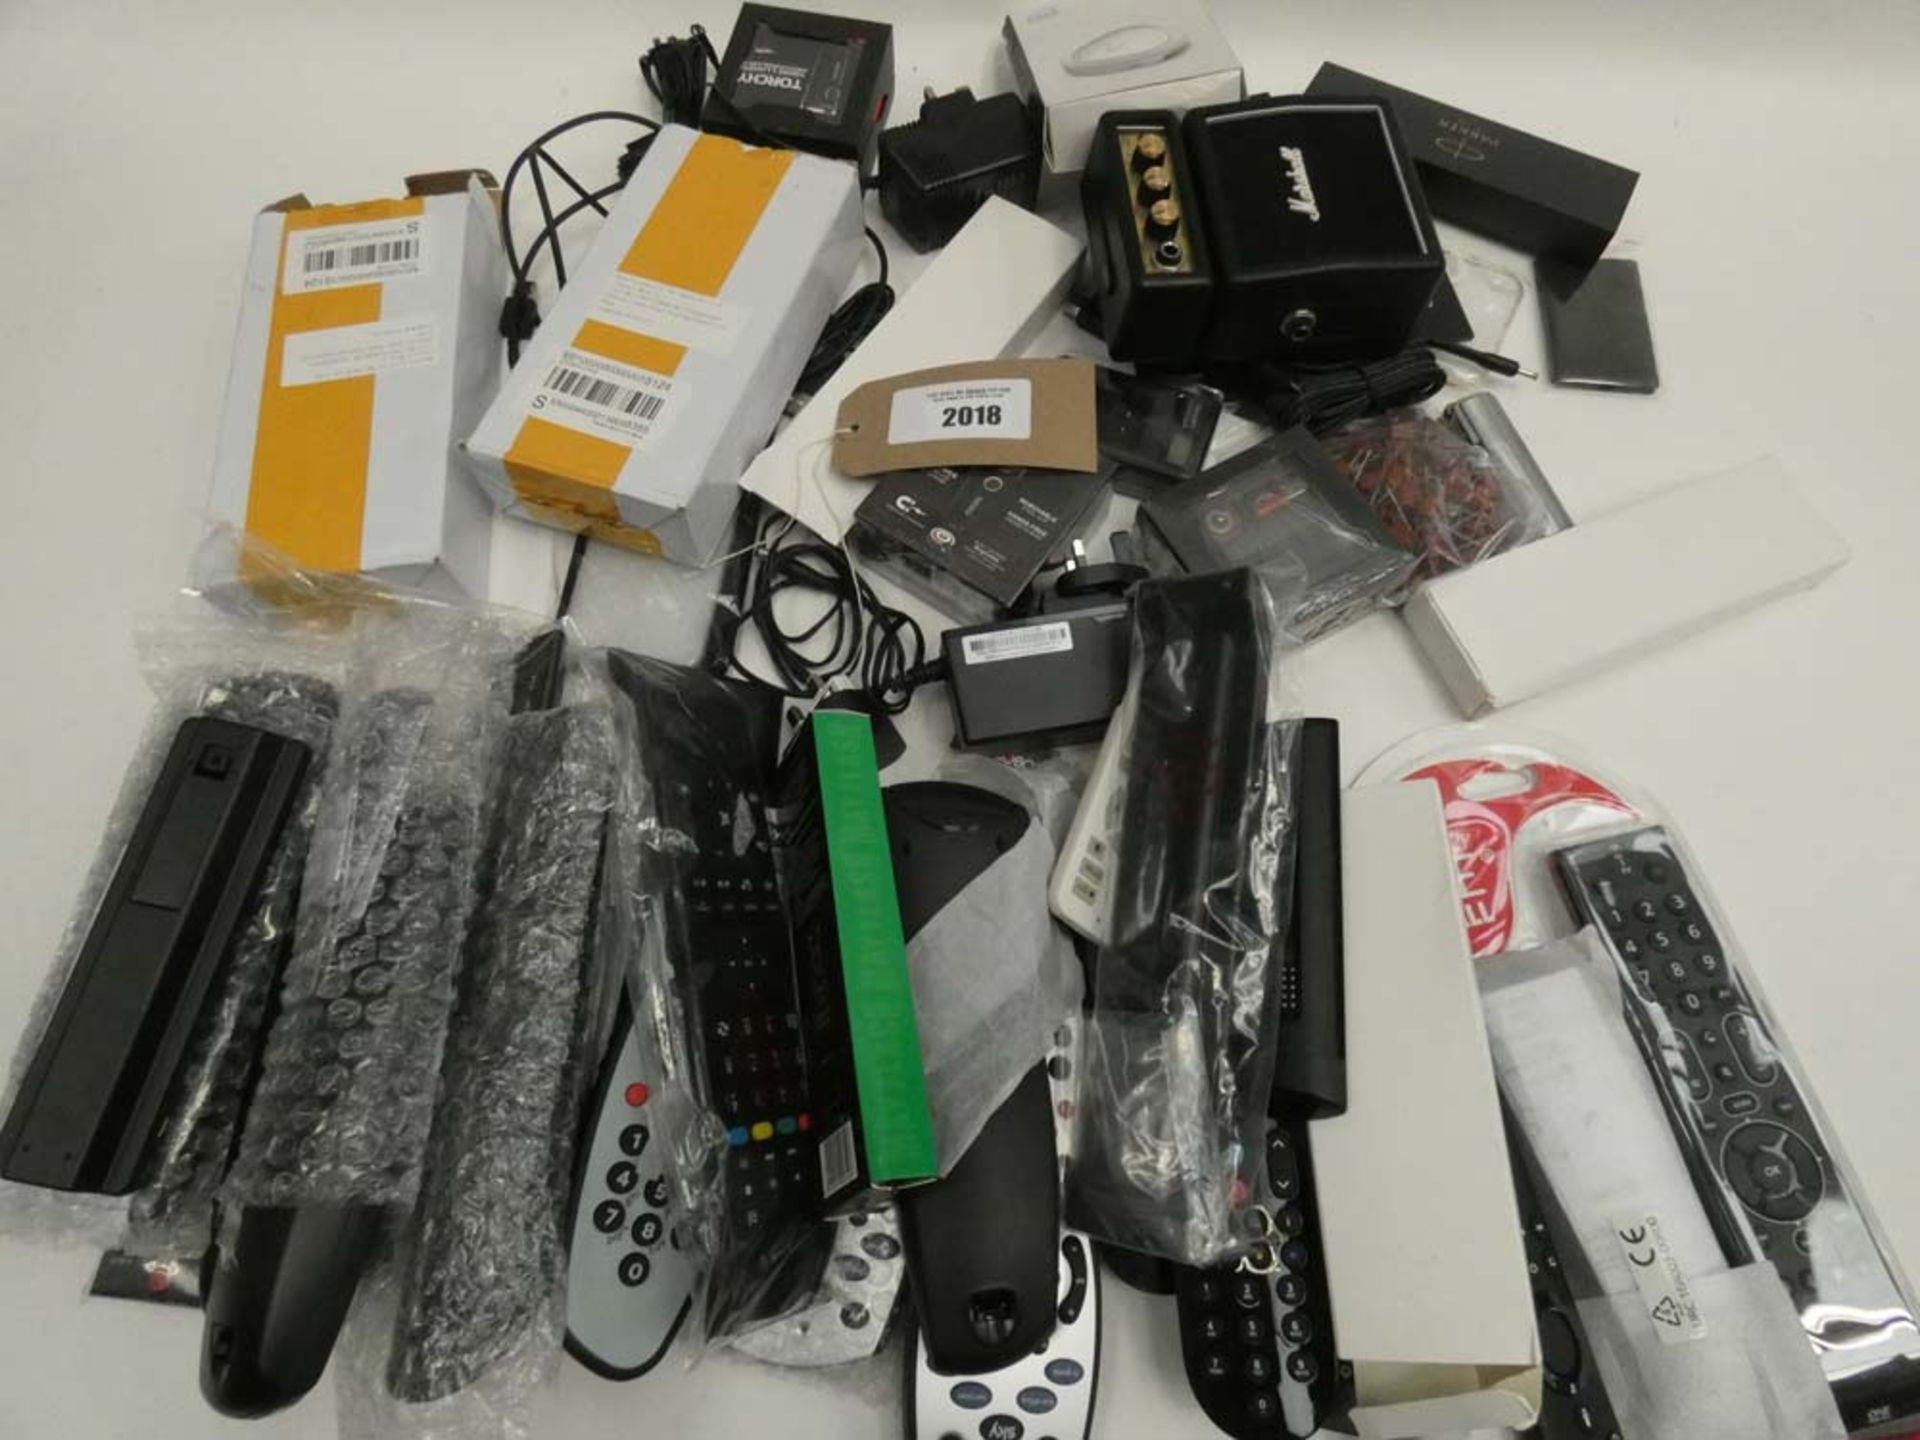 Bag containing quantity of remote controls, power supply units, speaker, Parker pen, etc